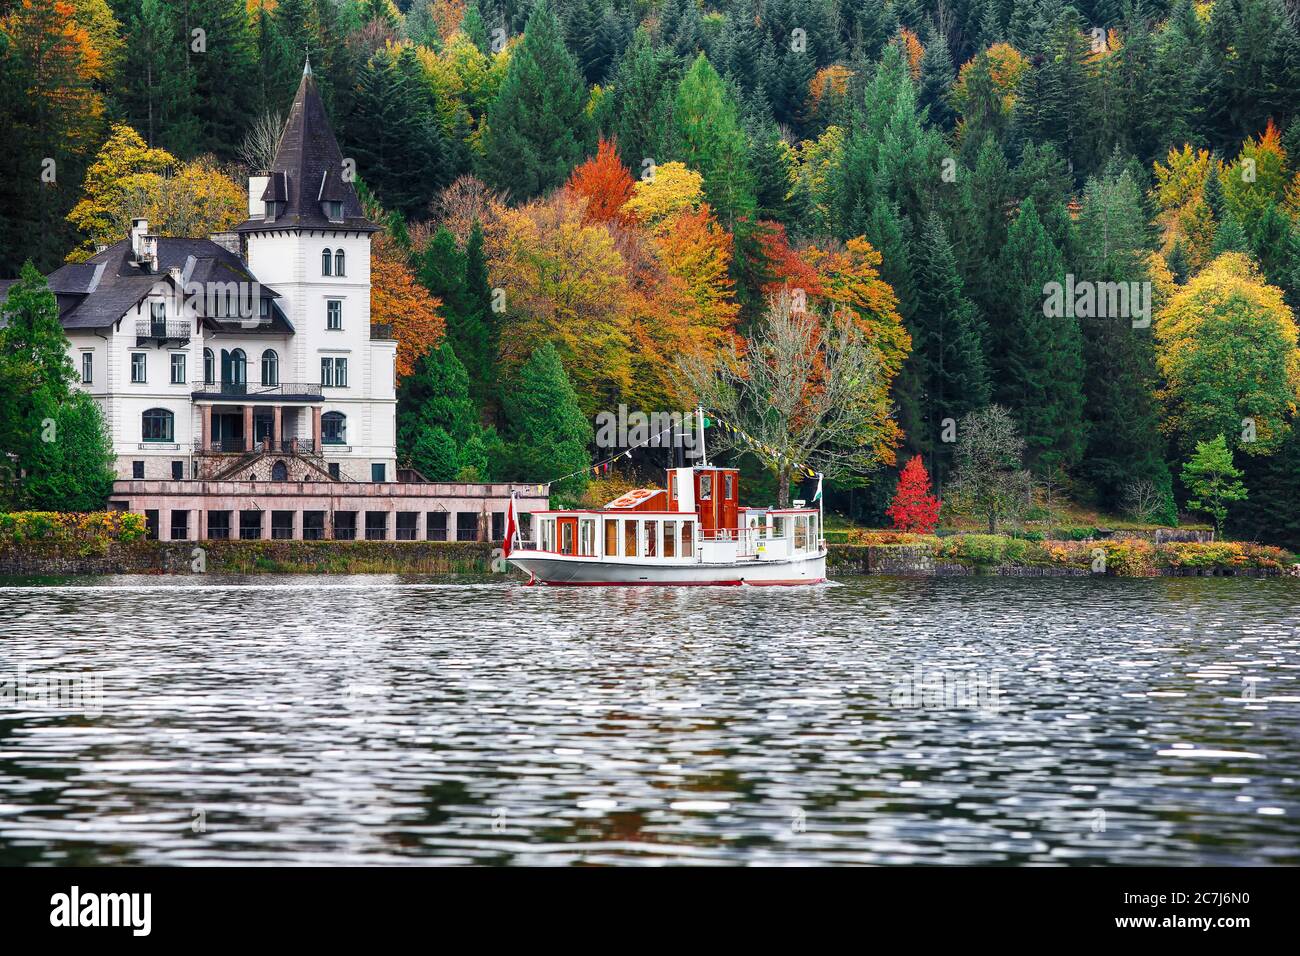 Idyllic autumn scene in Grundlsee lake. Location: resort Grundlsee, Liezen District of Styria, Austria, Alps. Europe. Stock Photo